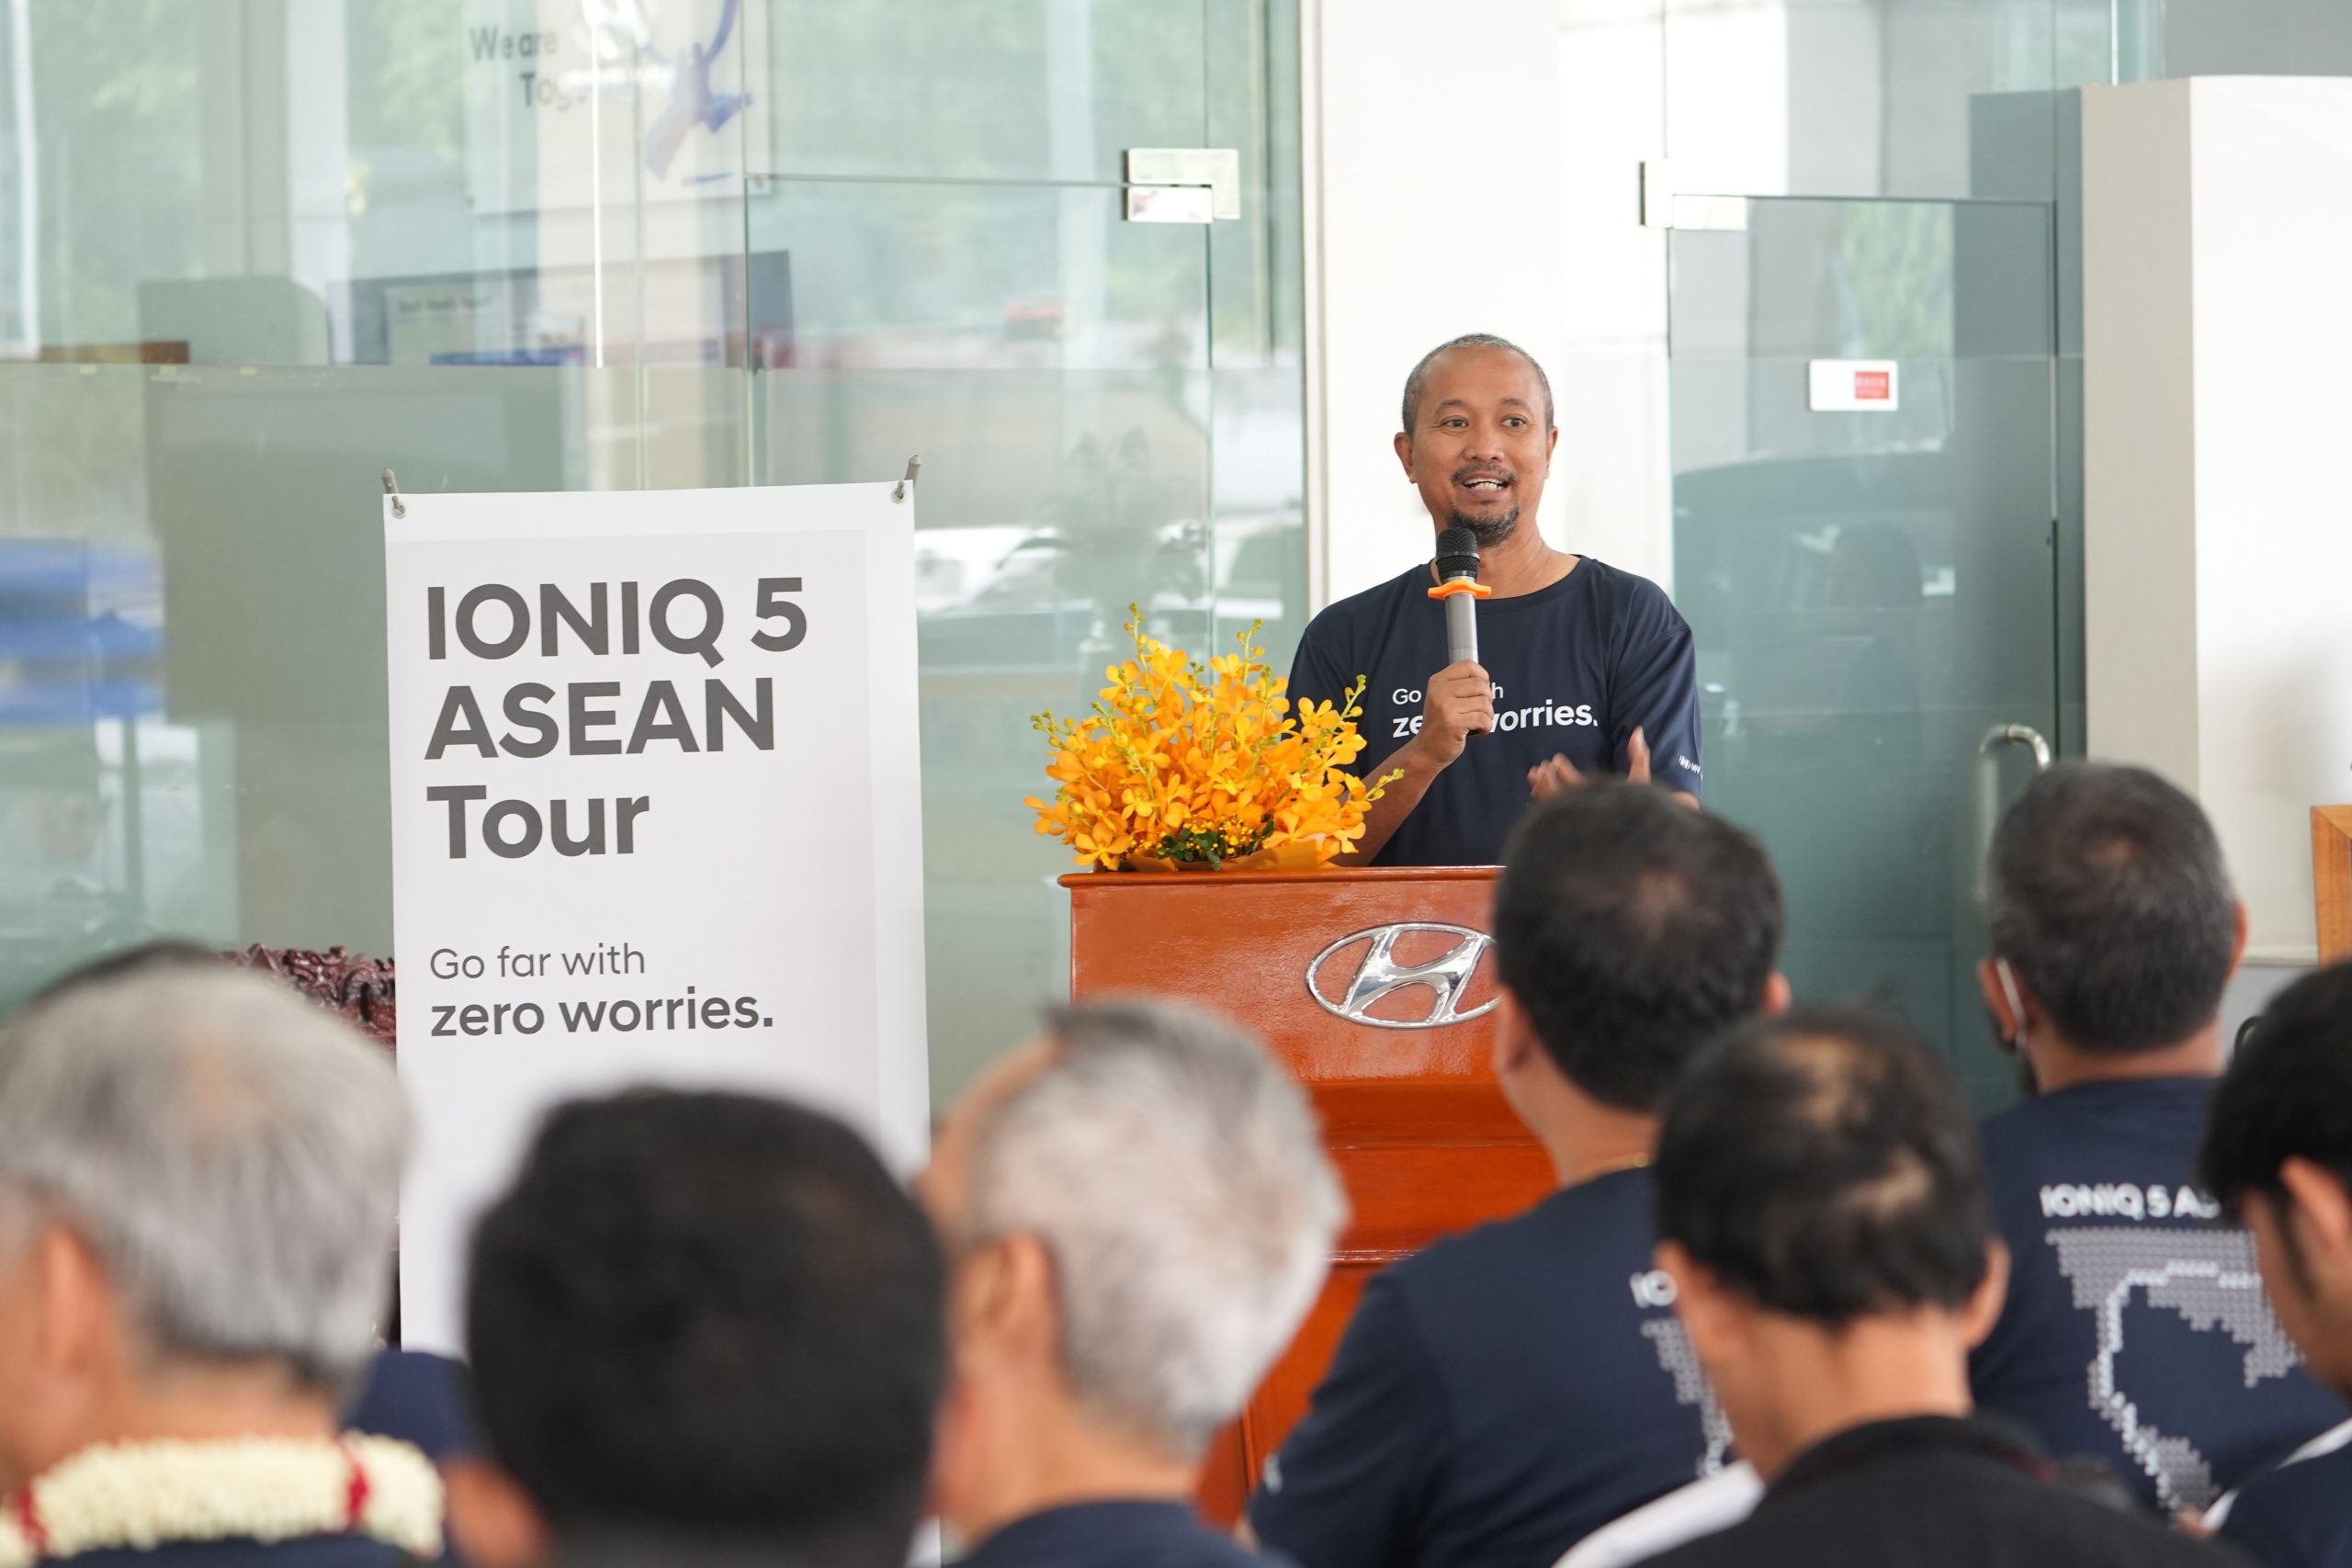 Foto 3 Perwakilan Indonesia di IONIQ 5 ASEAN Tour scaled